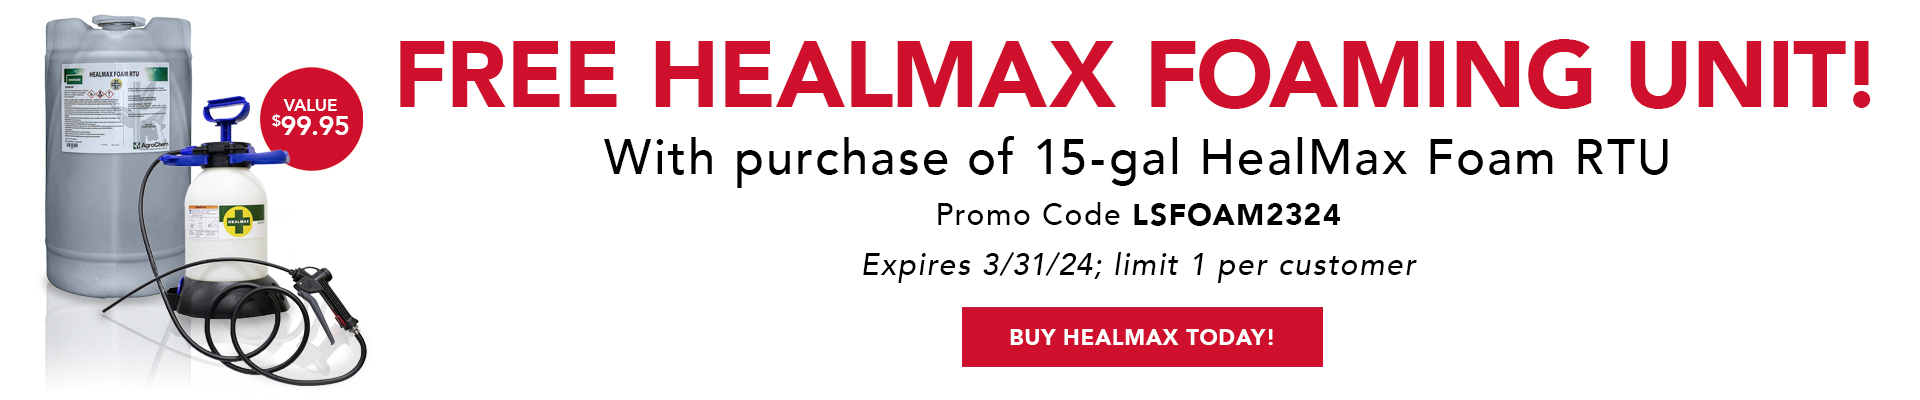 FREE HEALMAX FOAMING UNIT! With purchase of 15-gal HealMax Foam RTU Promo Code LSFOAM2324 Expires 3/31/24; limit 1 per customer (Value 99.95) Buy HealMax today!